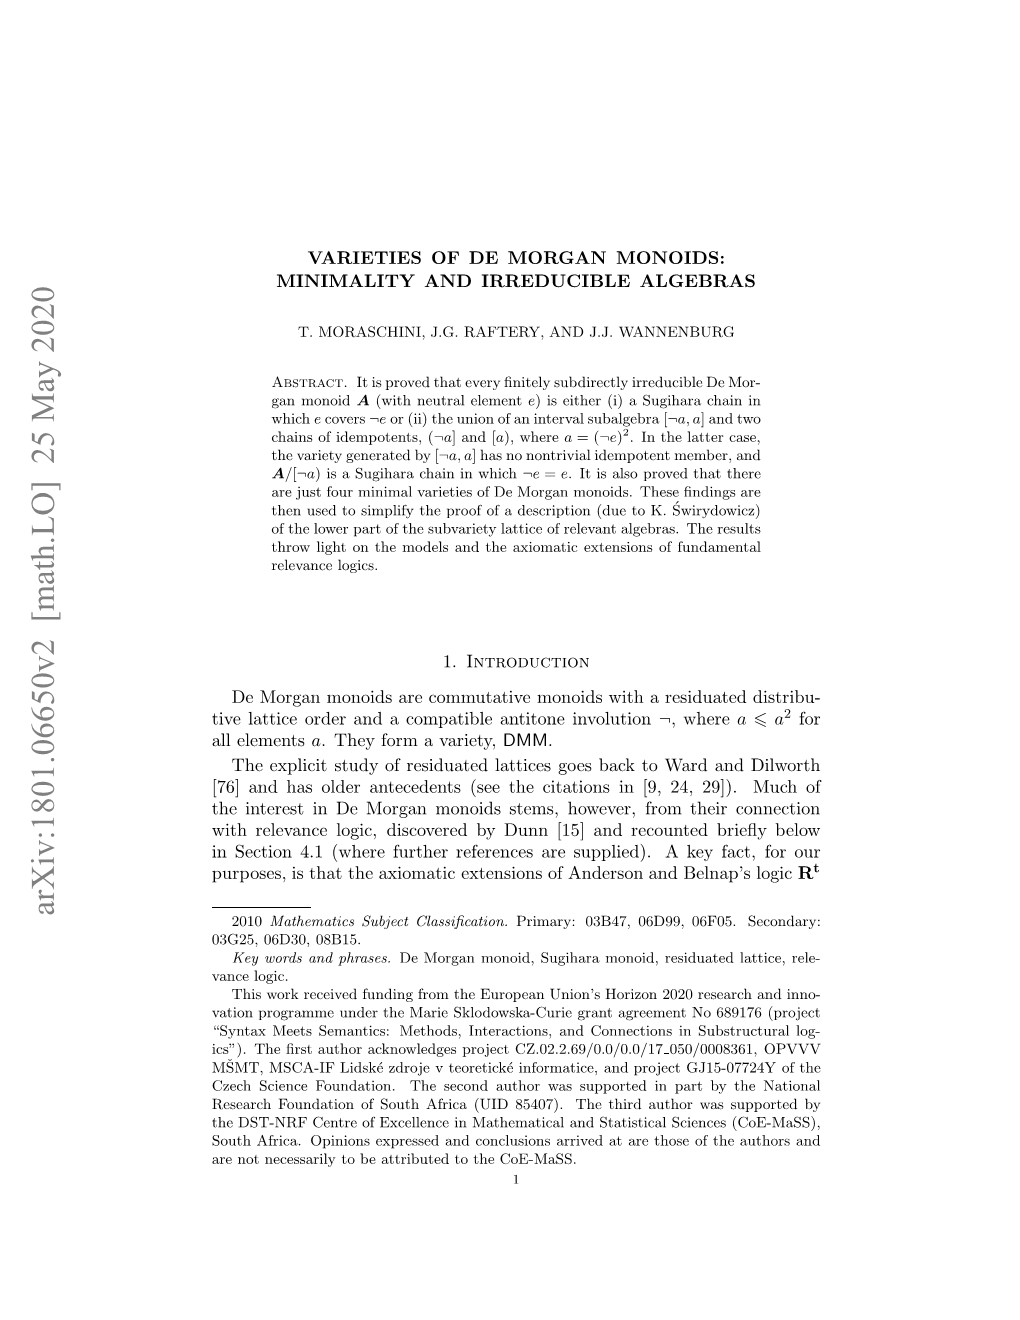 Varieties of De Morgan Monoids: Minimality and Irreducible Algebras